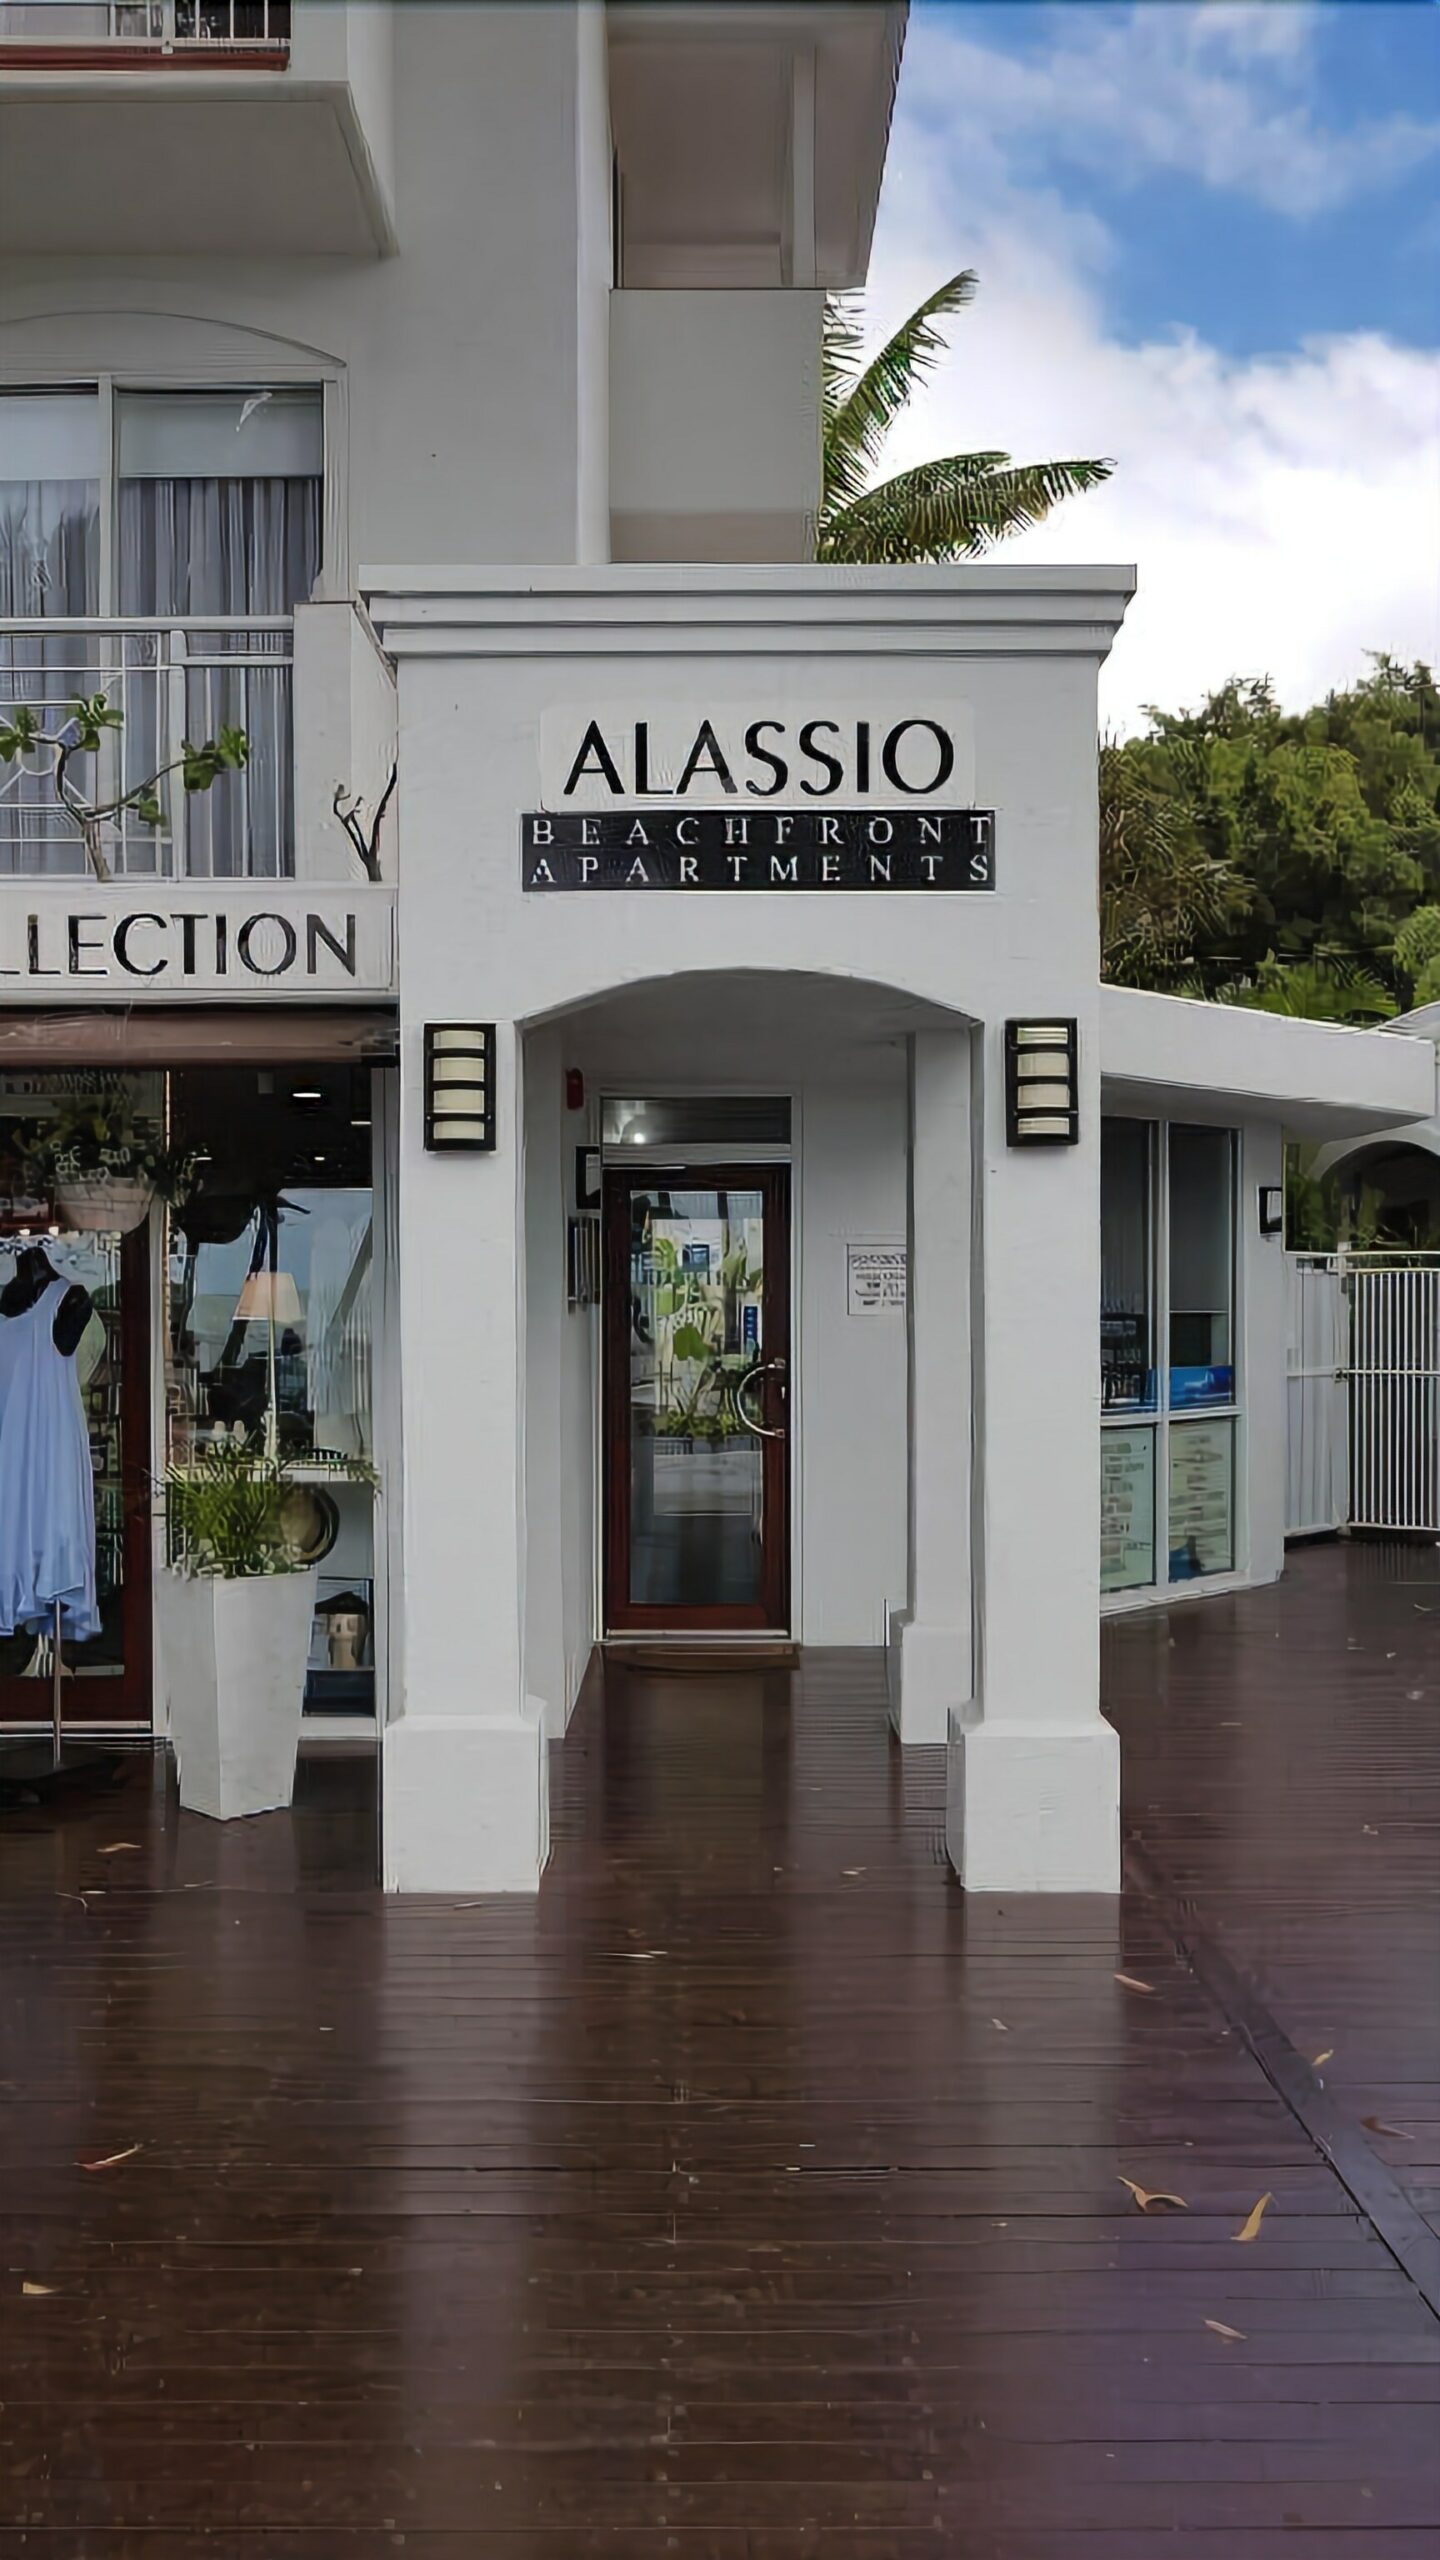 Alassio Palm Cove